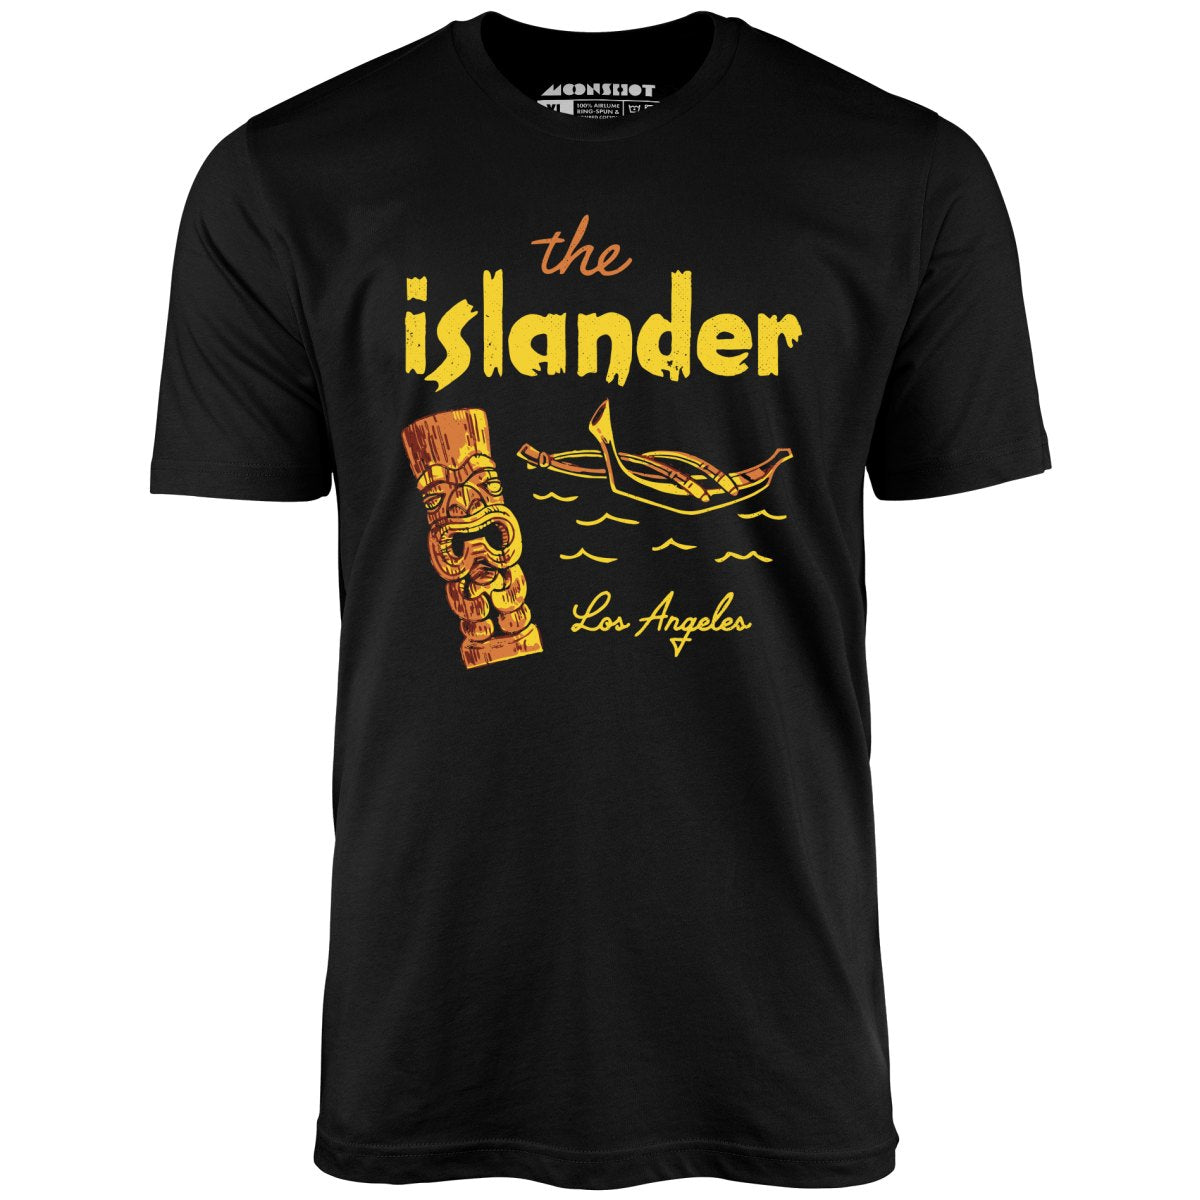 The Islander v2 - Los Angeles, CA - Vintage Tiki Bar - Unisex T-Shirt